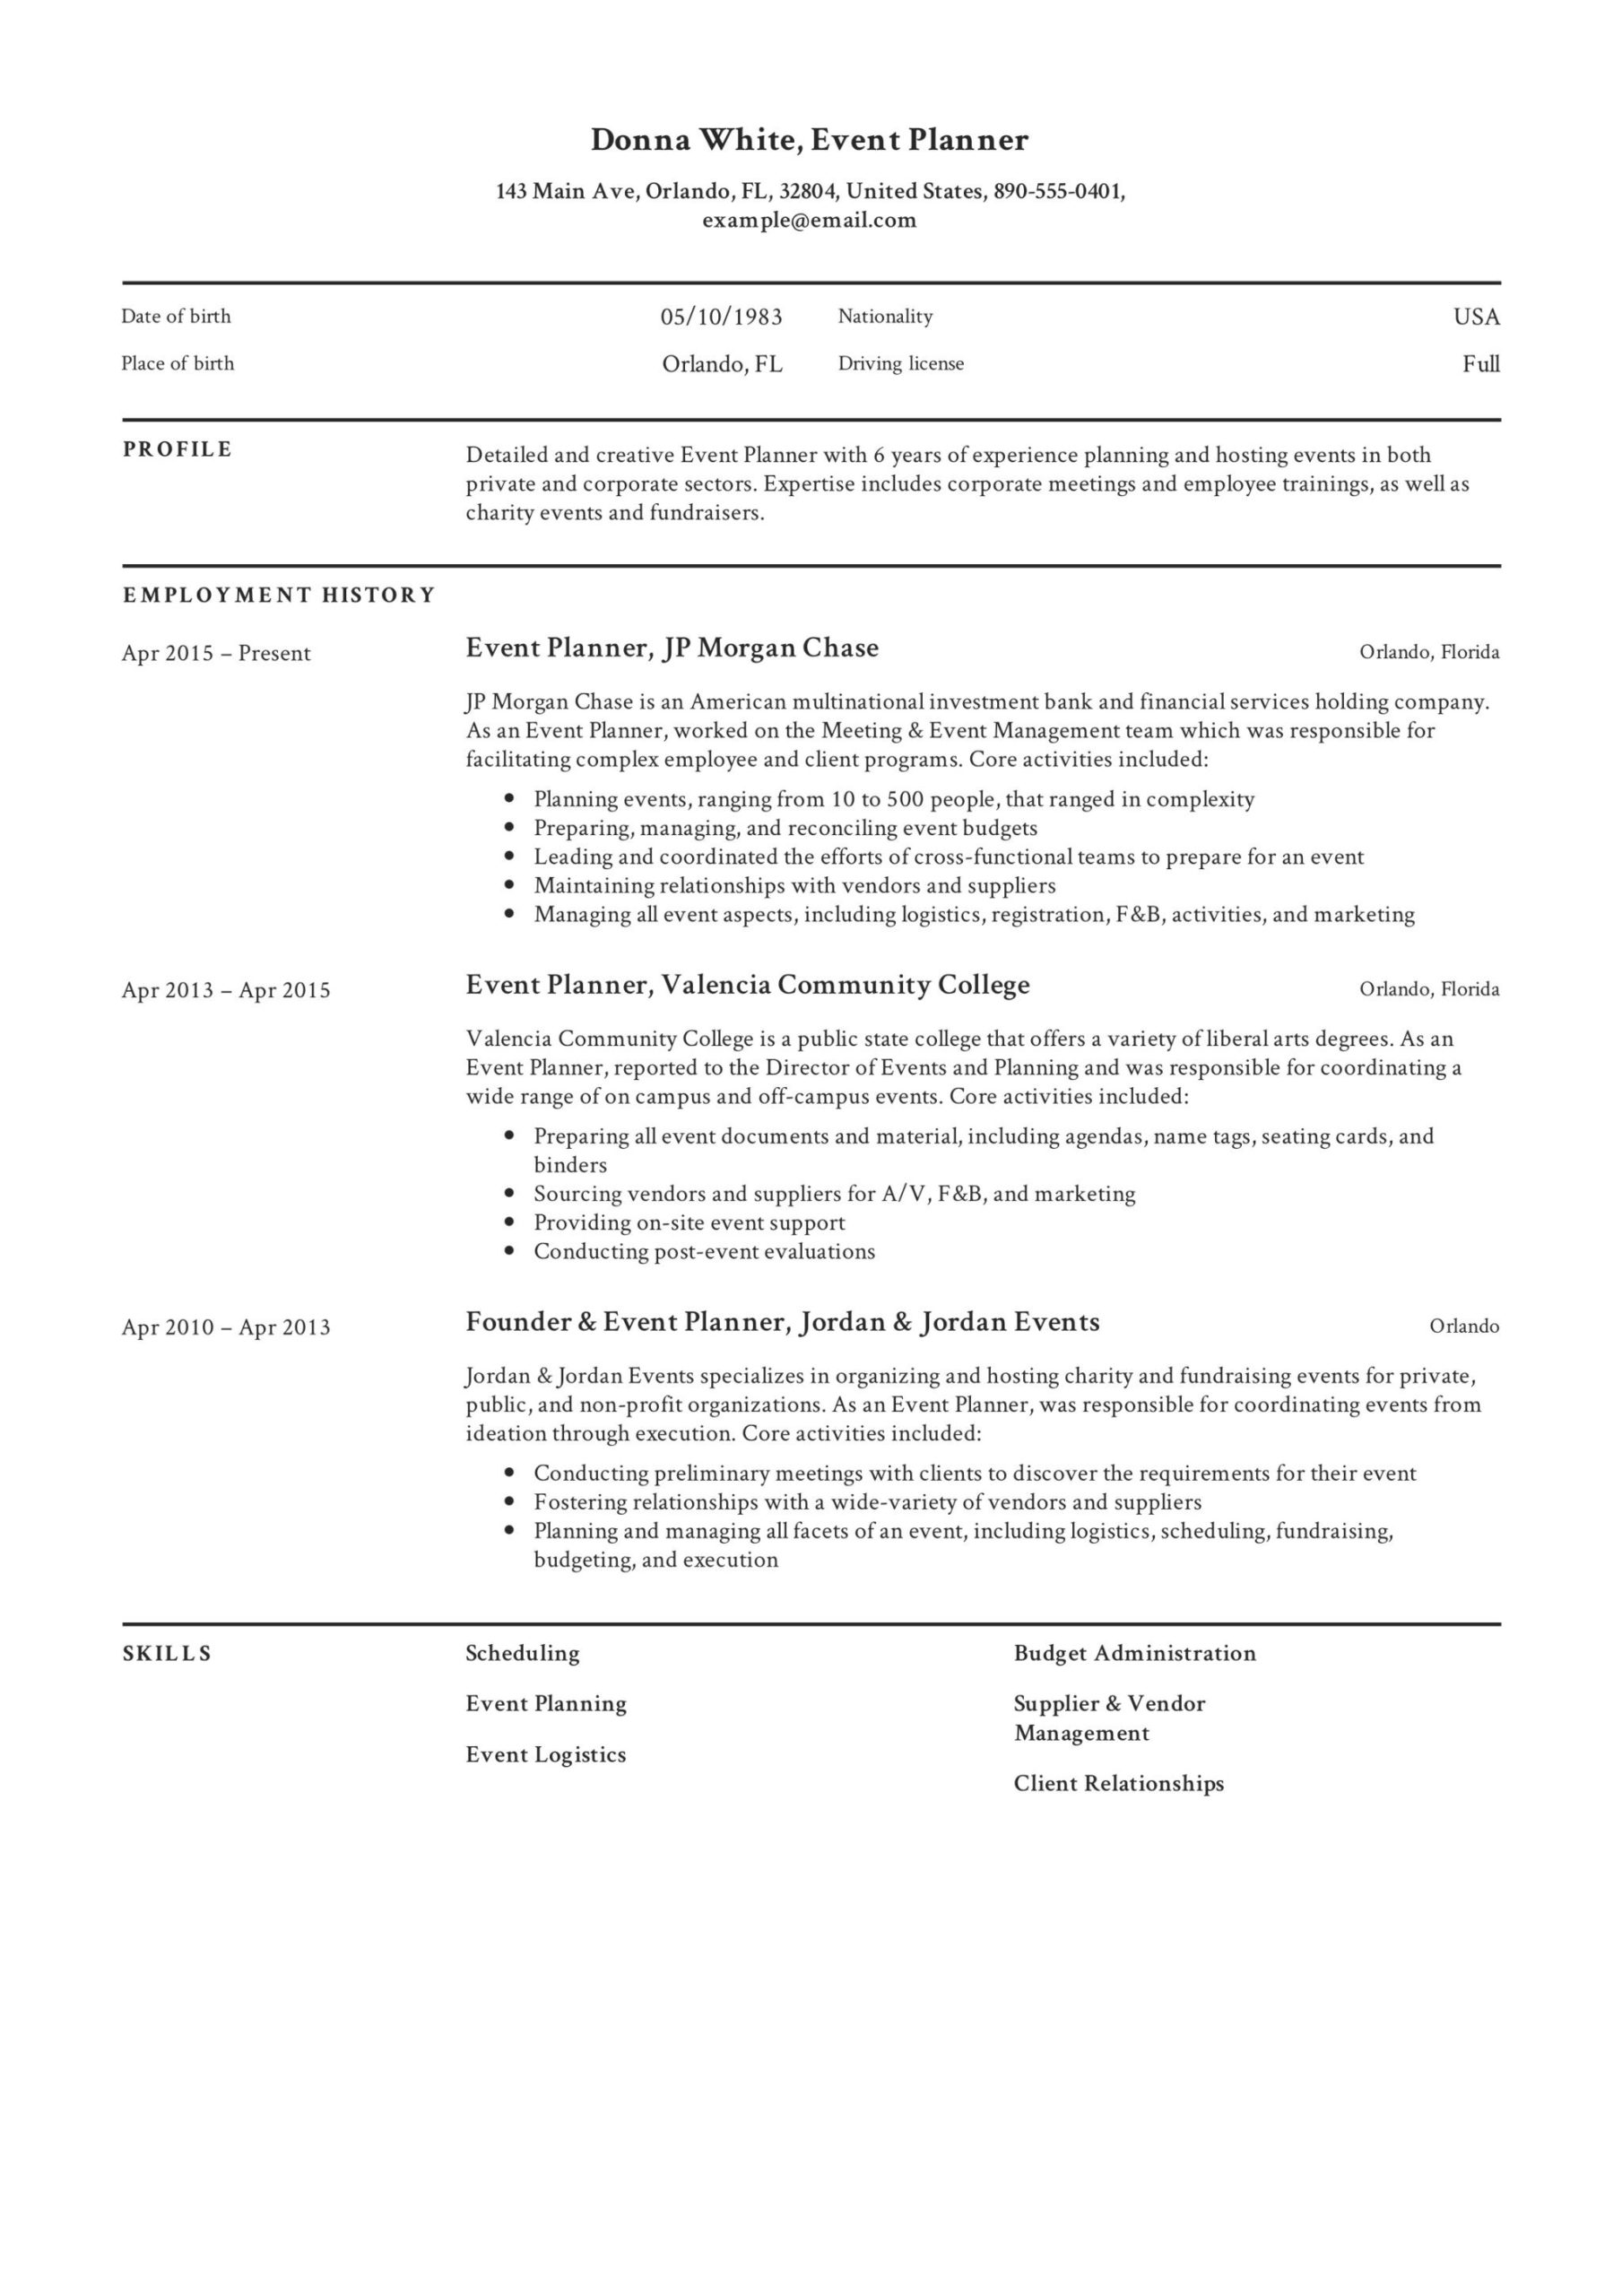 Sample Resume for event Planner assistant Guide: event Planner Resume 12 Templates Pdf 2022